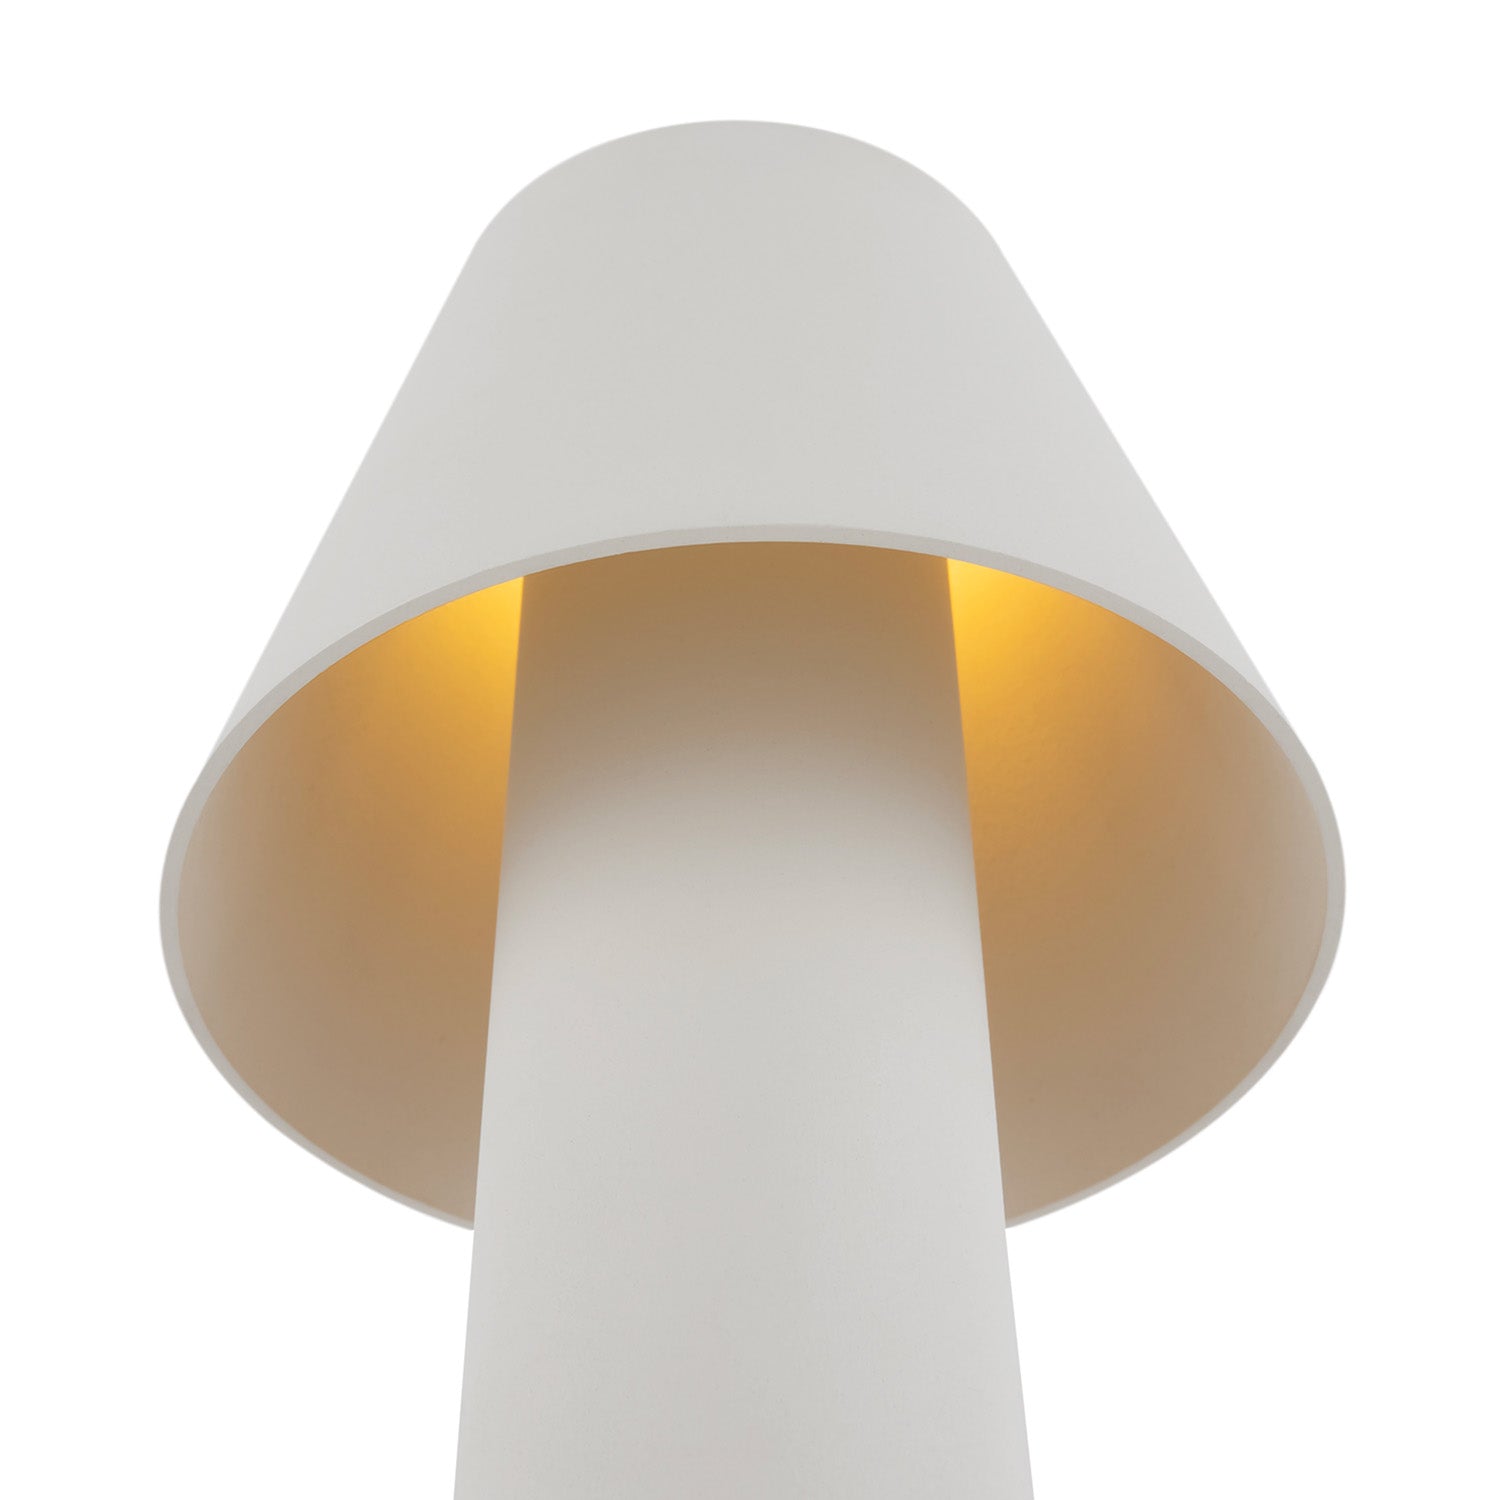 HARZ - Outdoor bollard light, mushroom lampshade